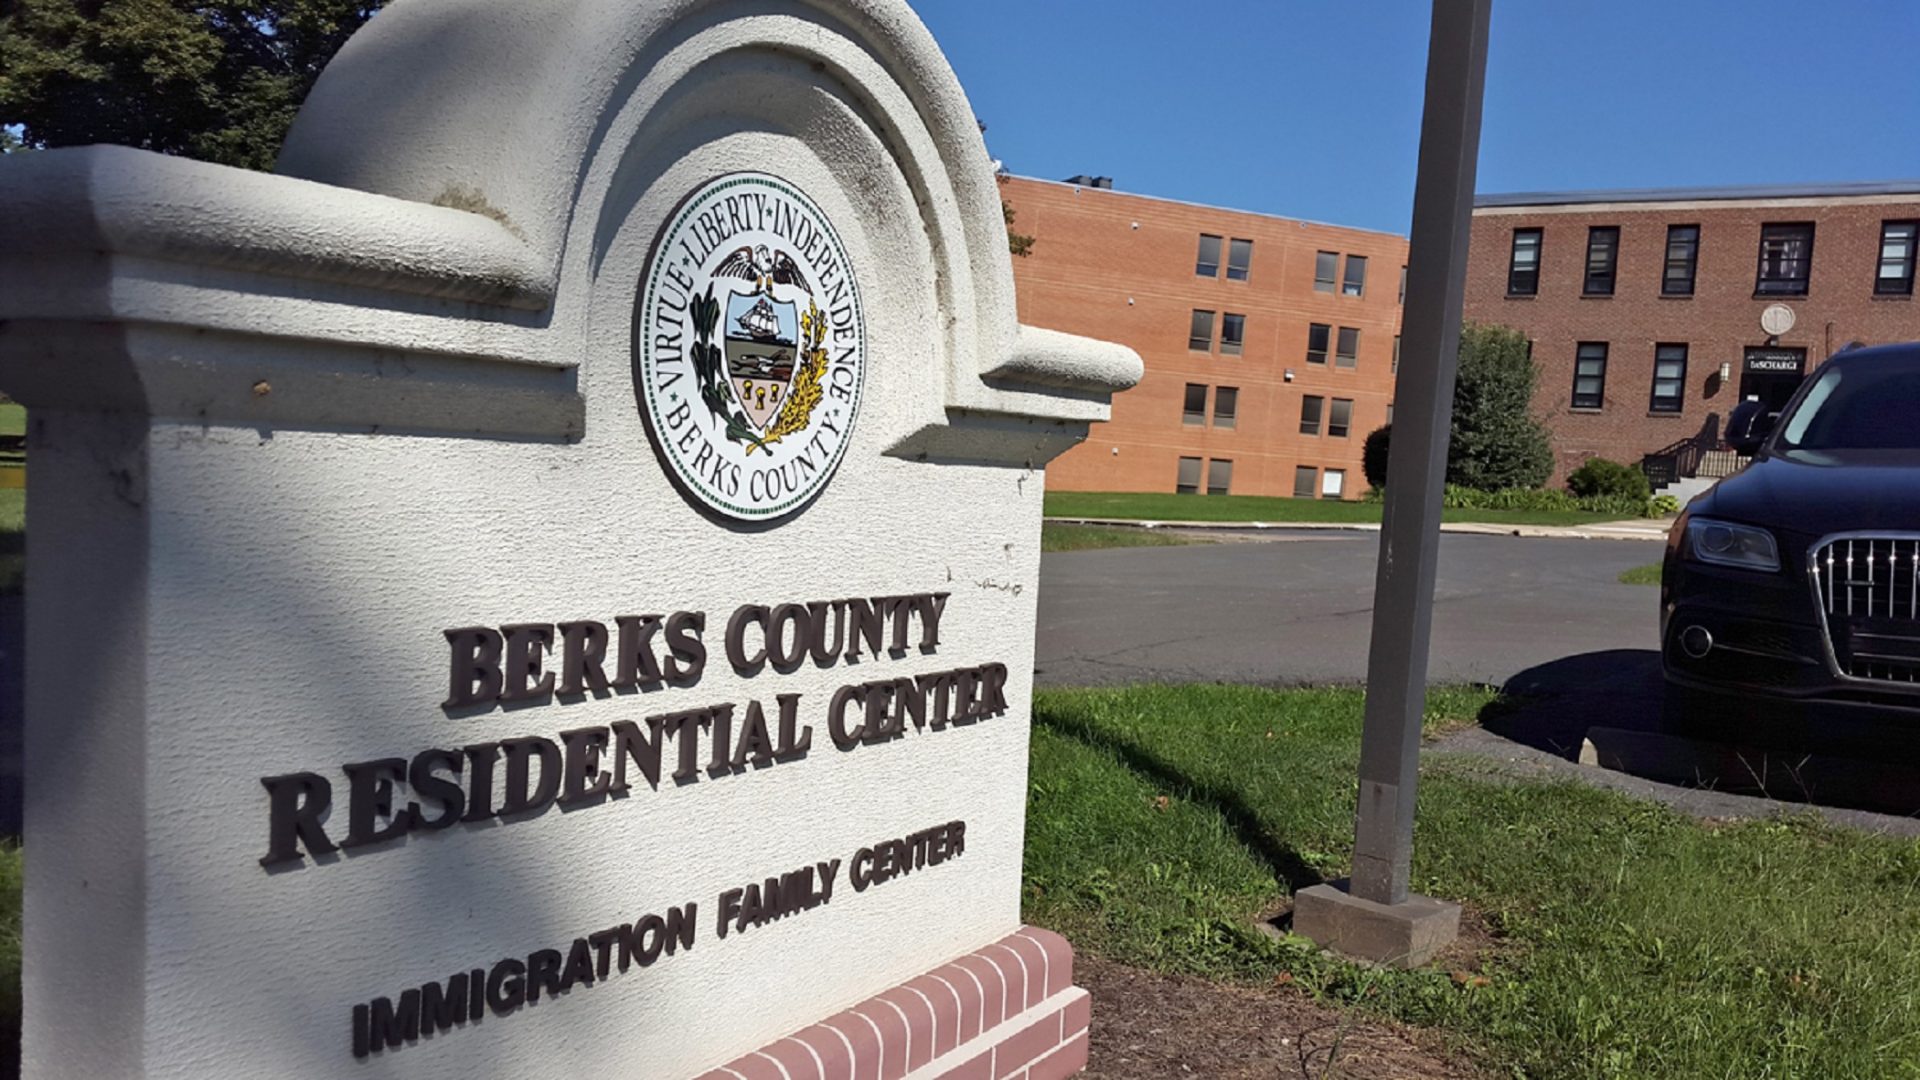 Berks County Residential Center, July 19, 2019.